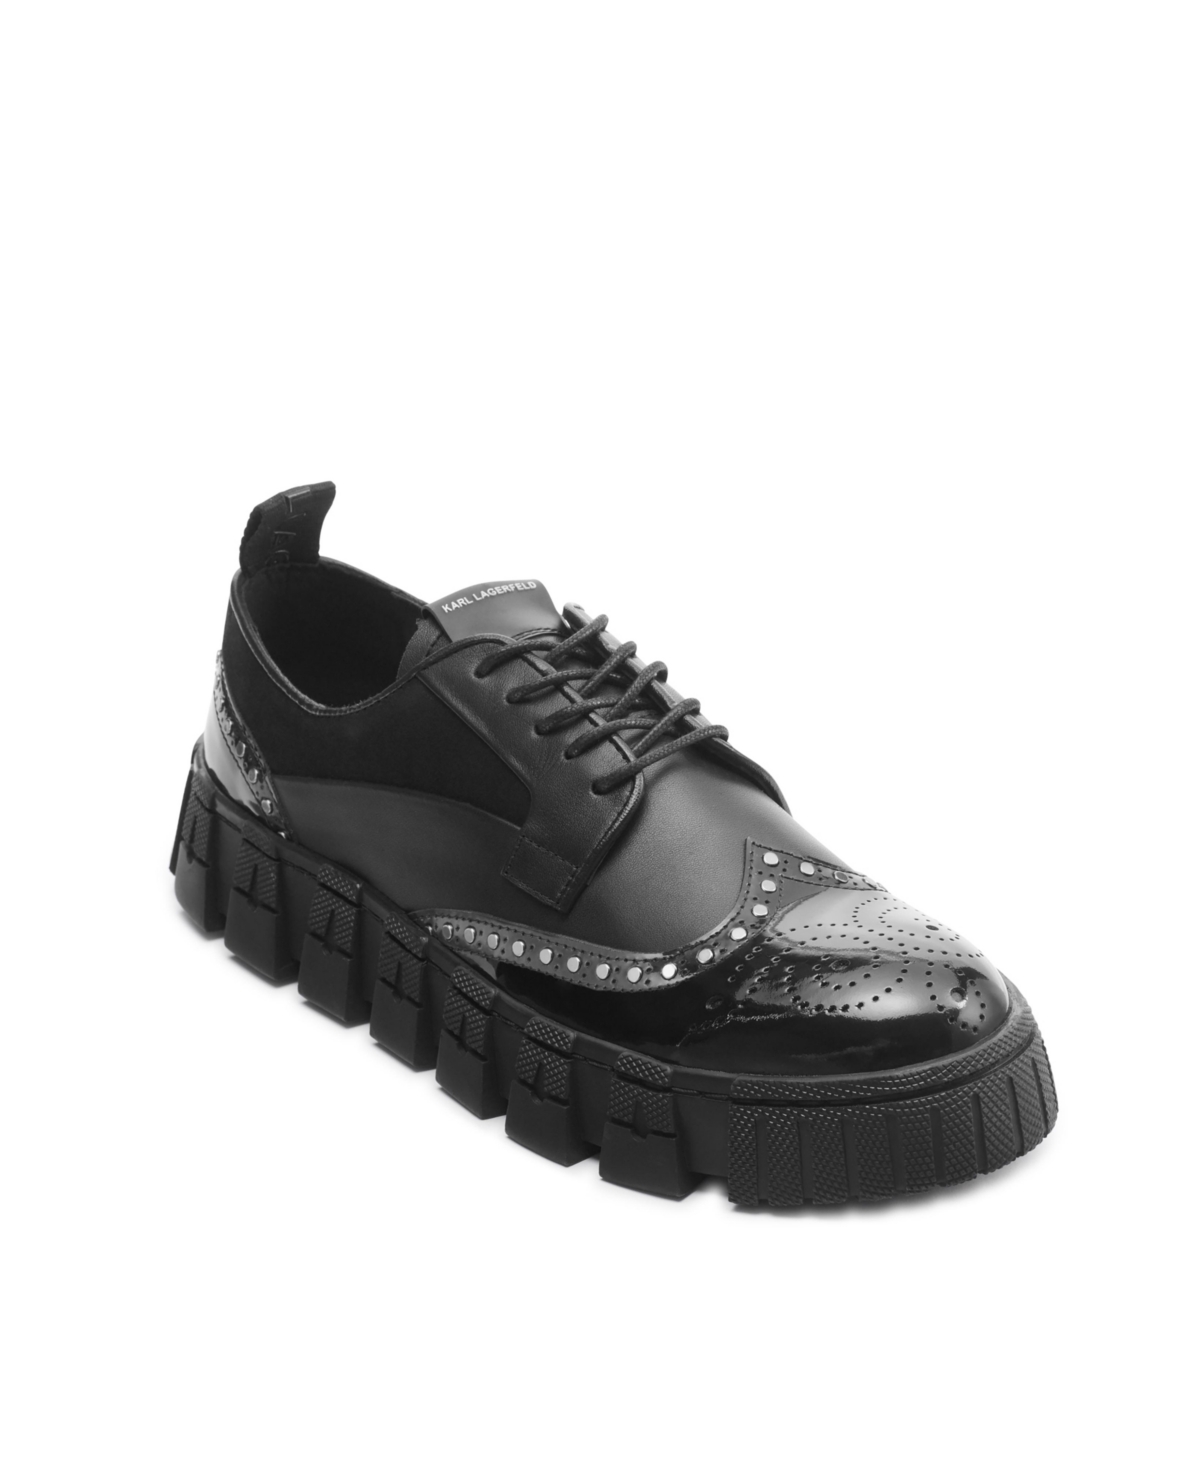 Men's White Label Leather Wingtip Studded Derby Shoes - Black